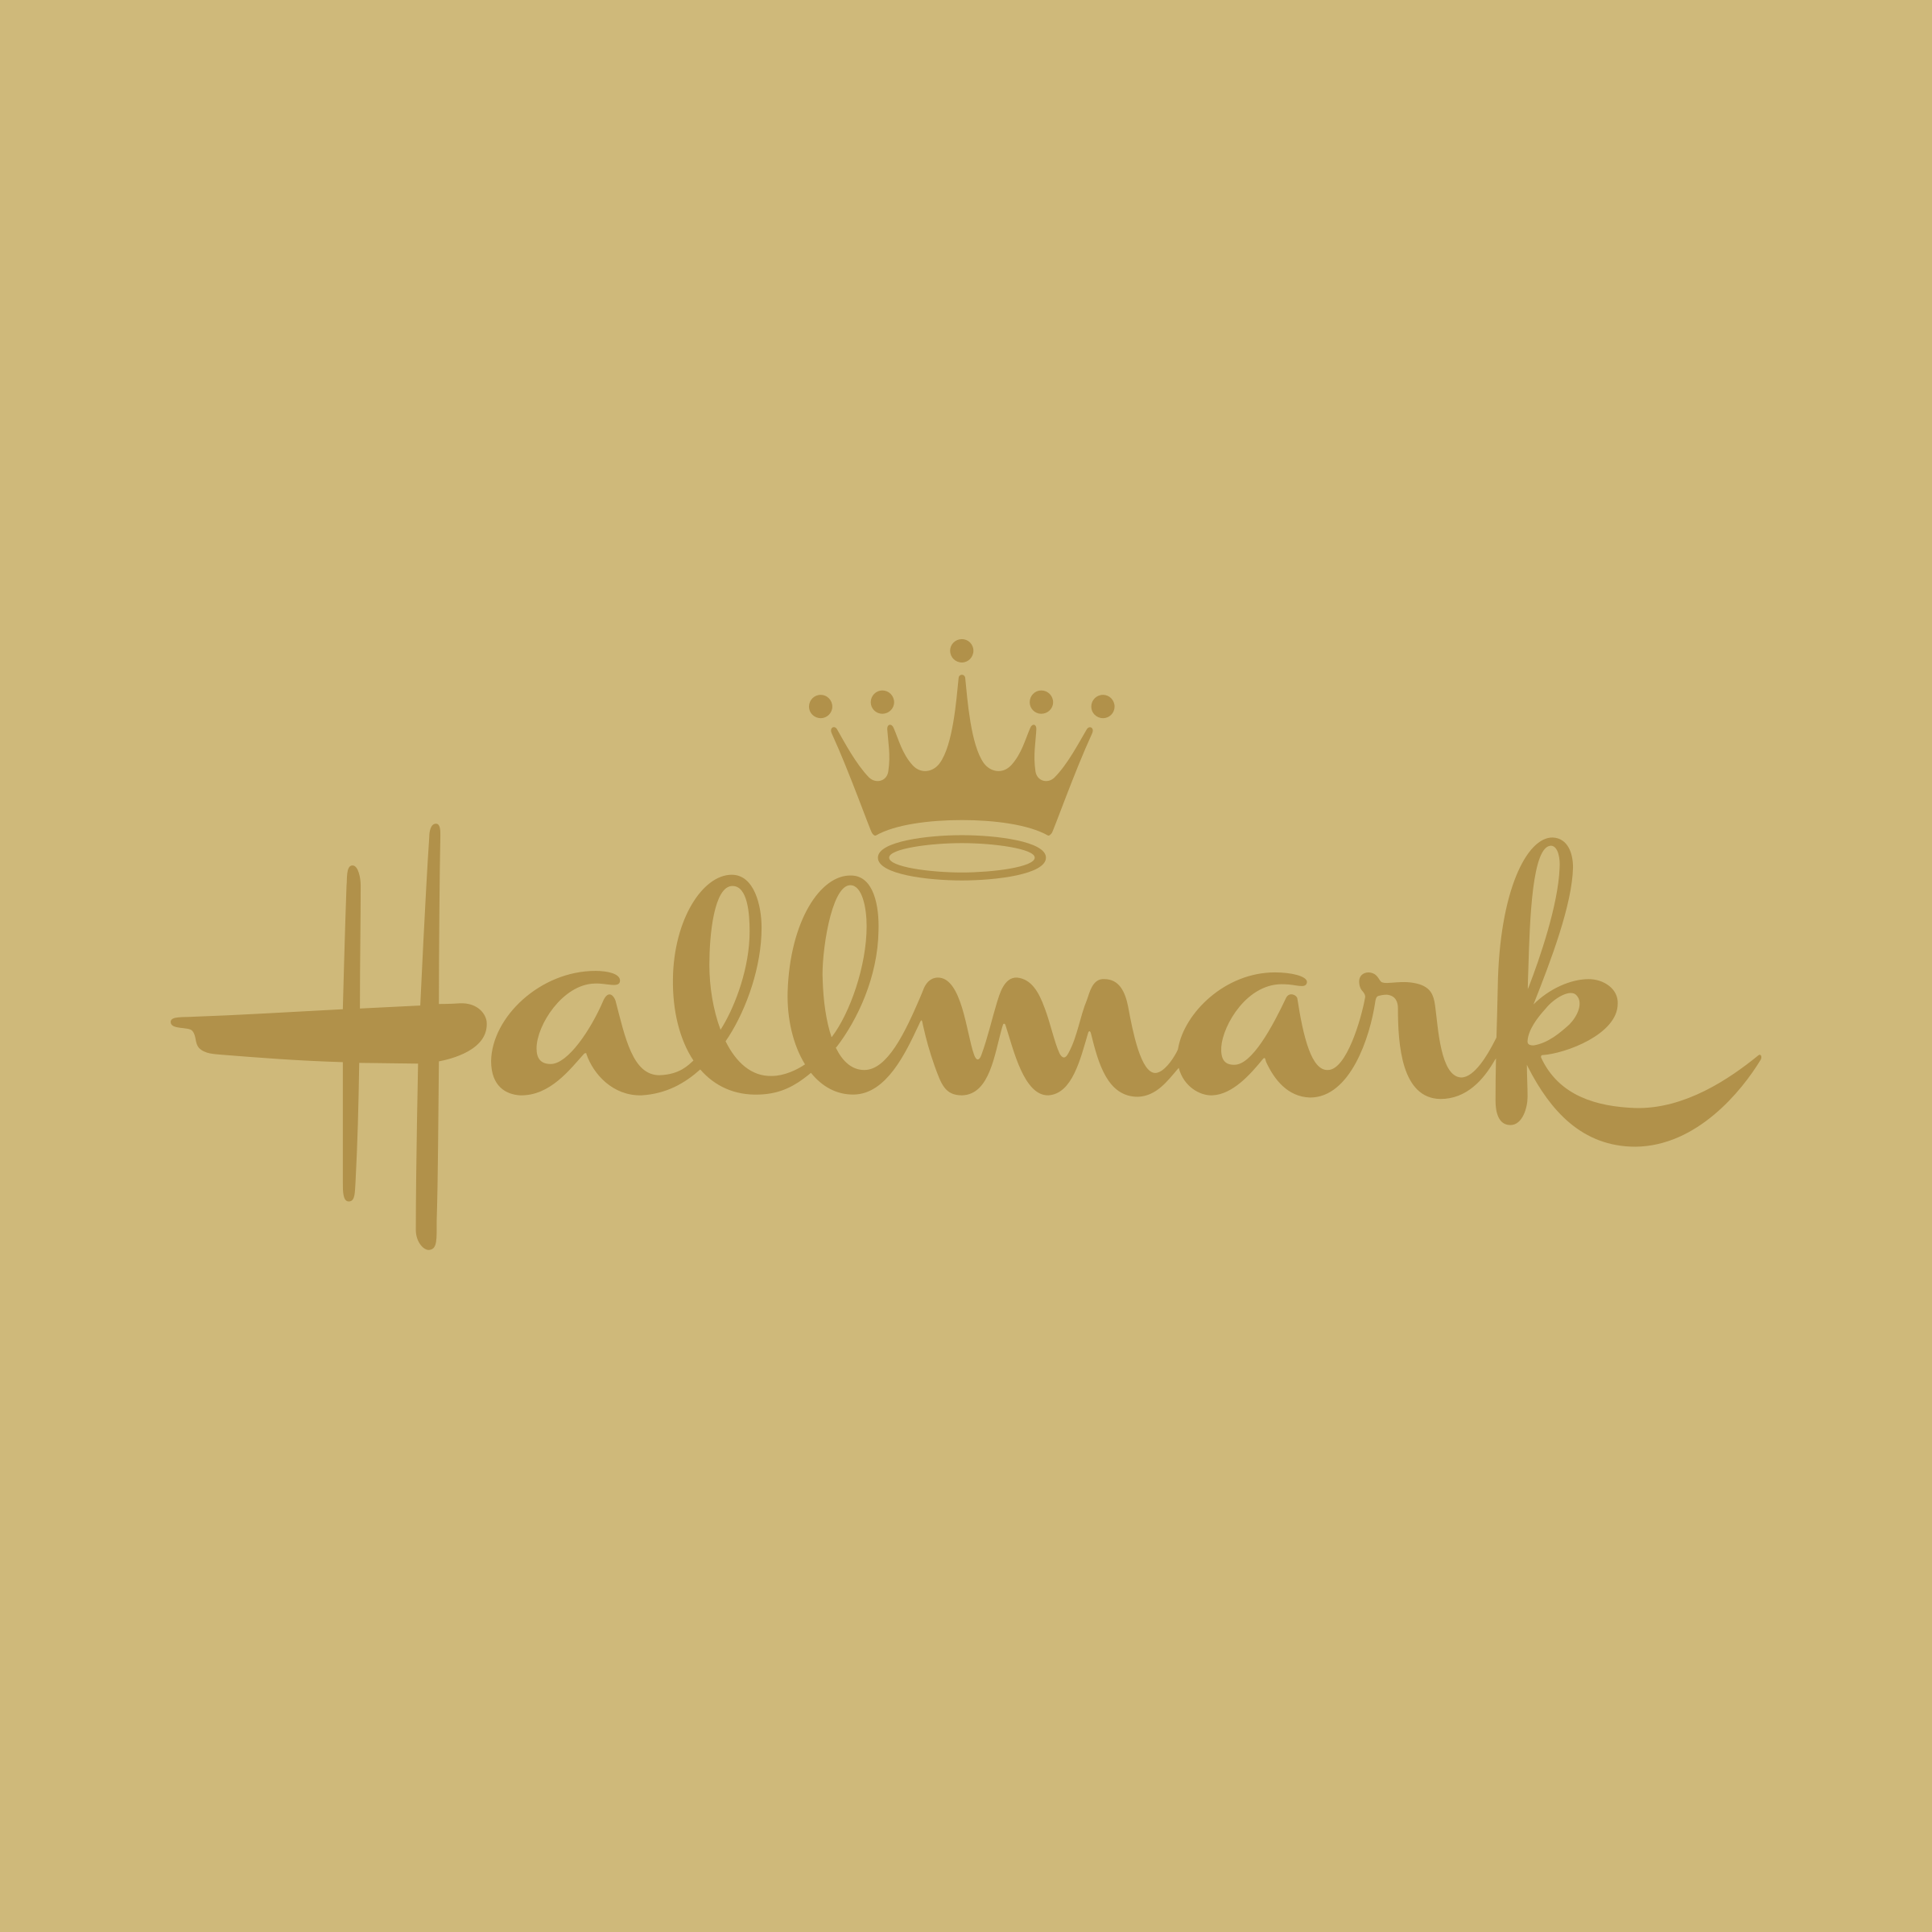 Hallmark Logo - Hallmark Logo PNG Transparent & SVG Vector - Freebie Supply